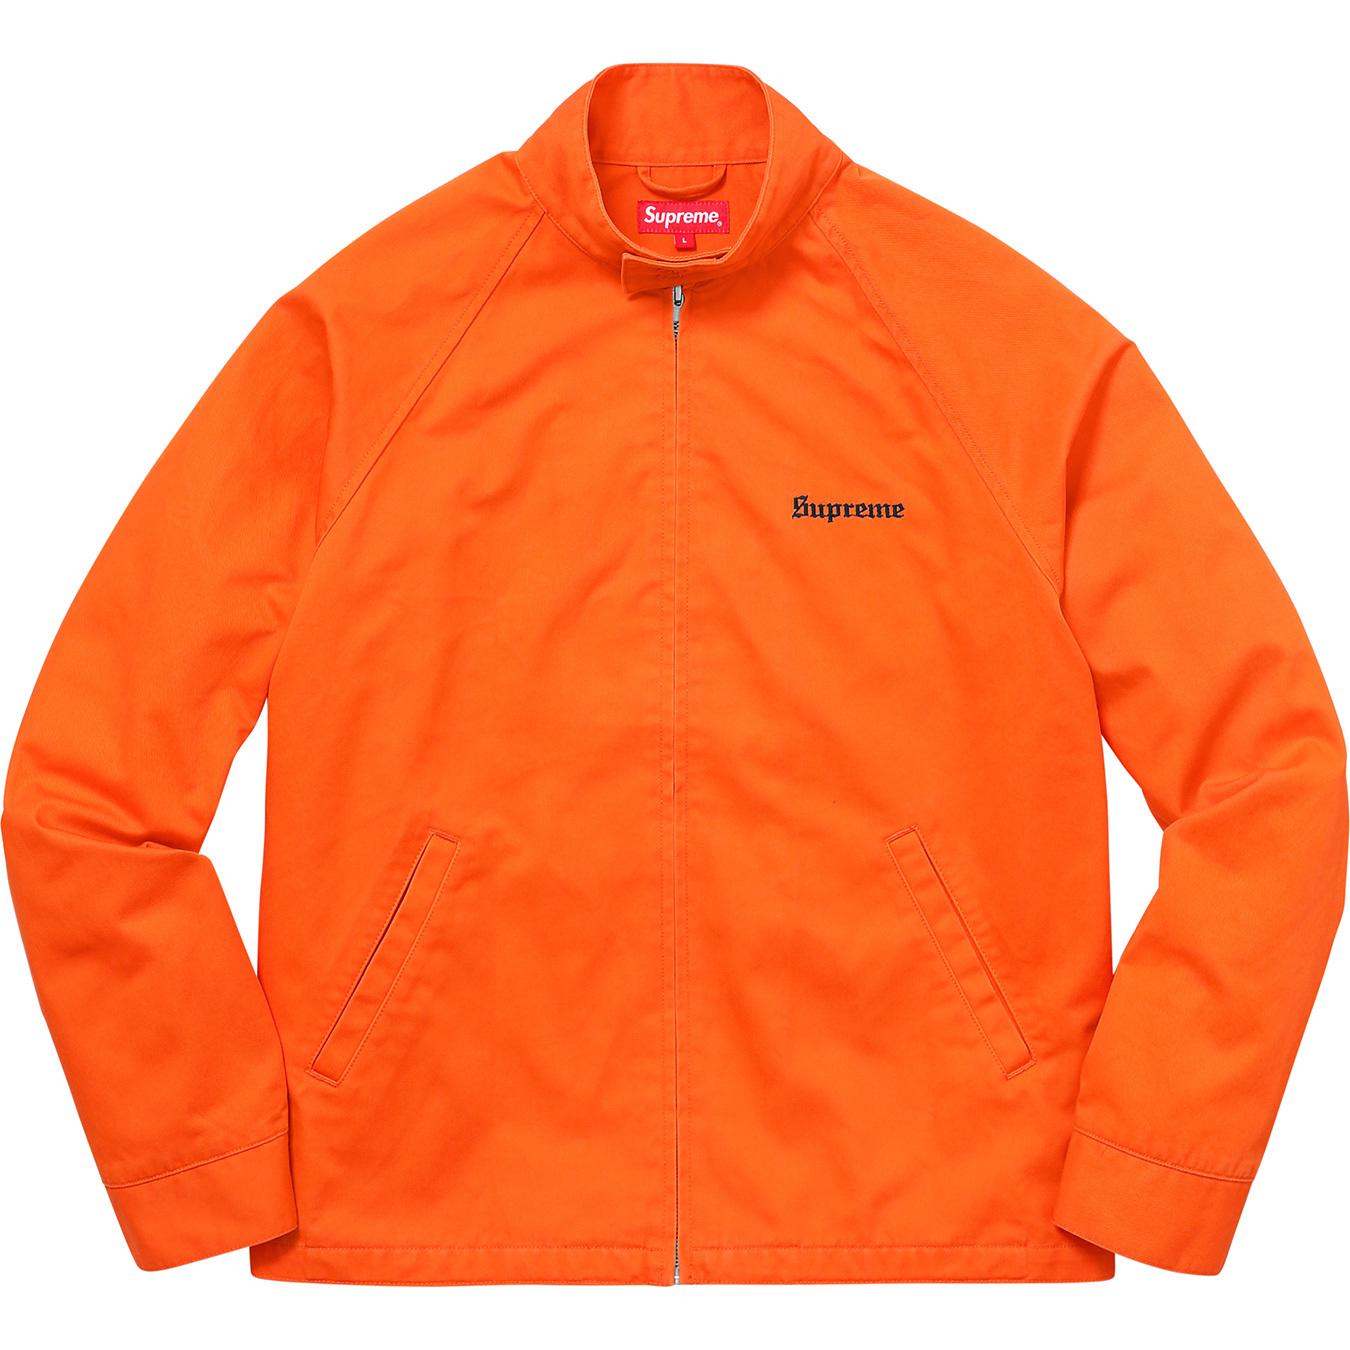 Supreme Chief Harrington Jacket Orange for Men - Lyst